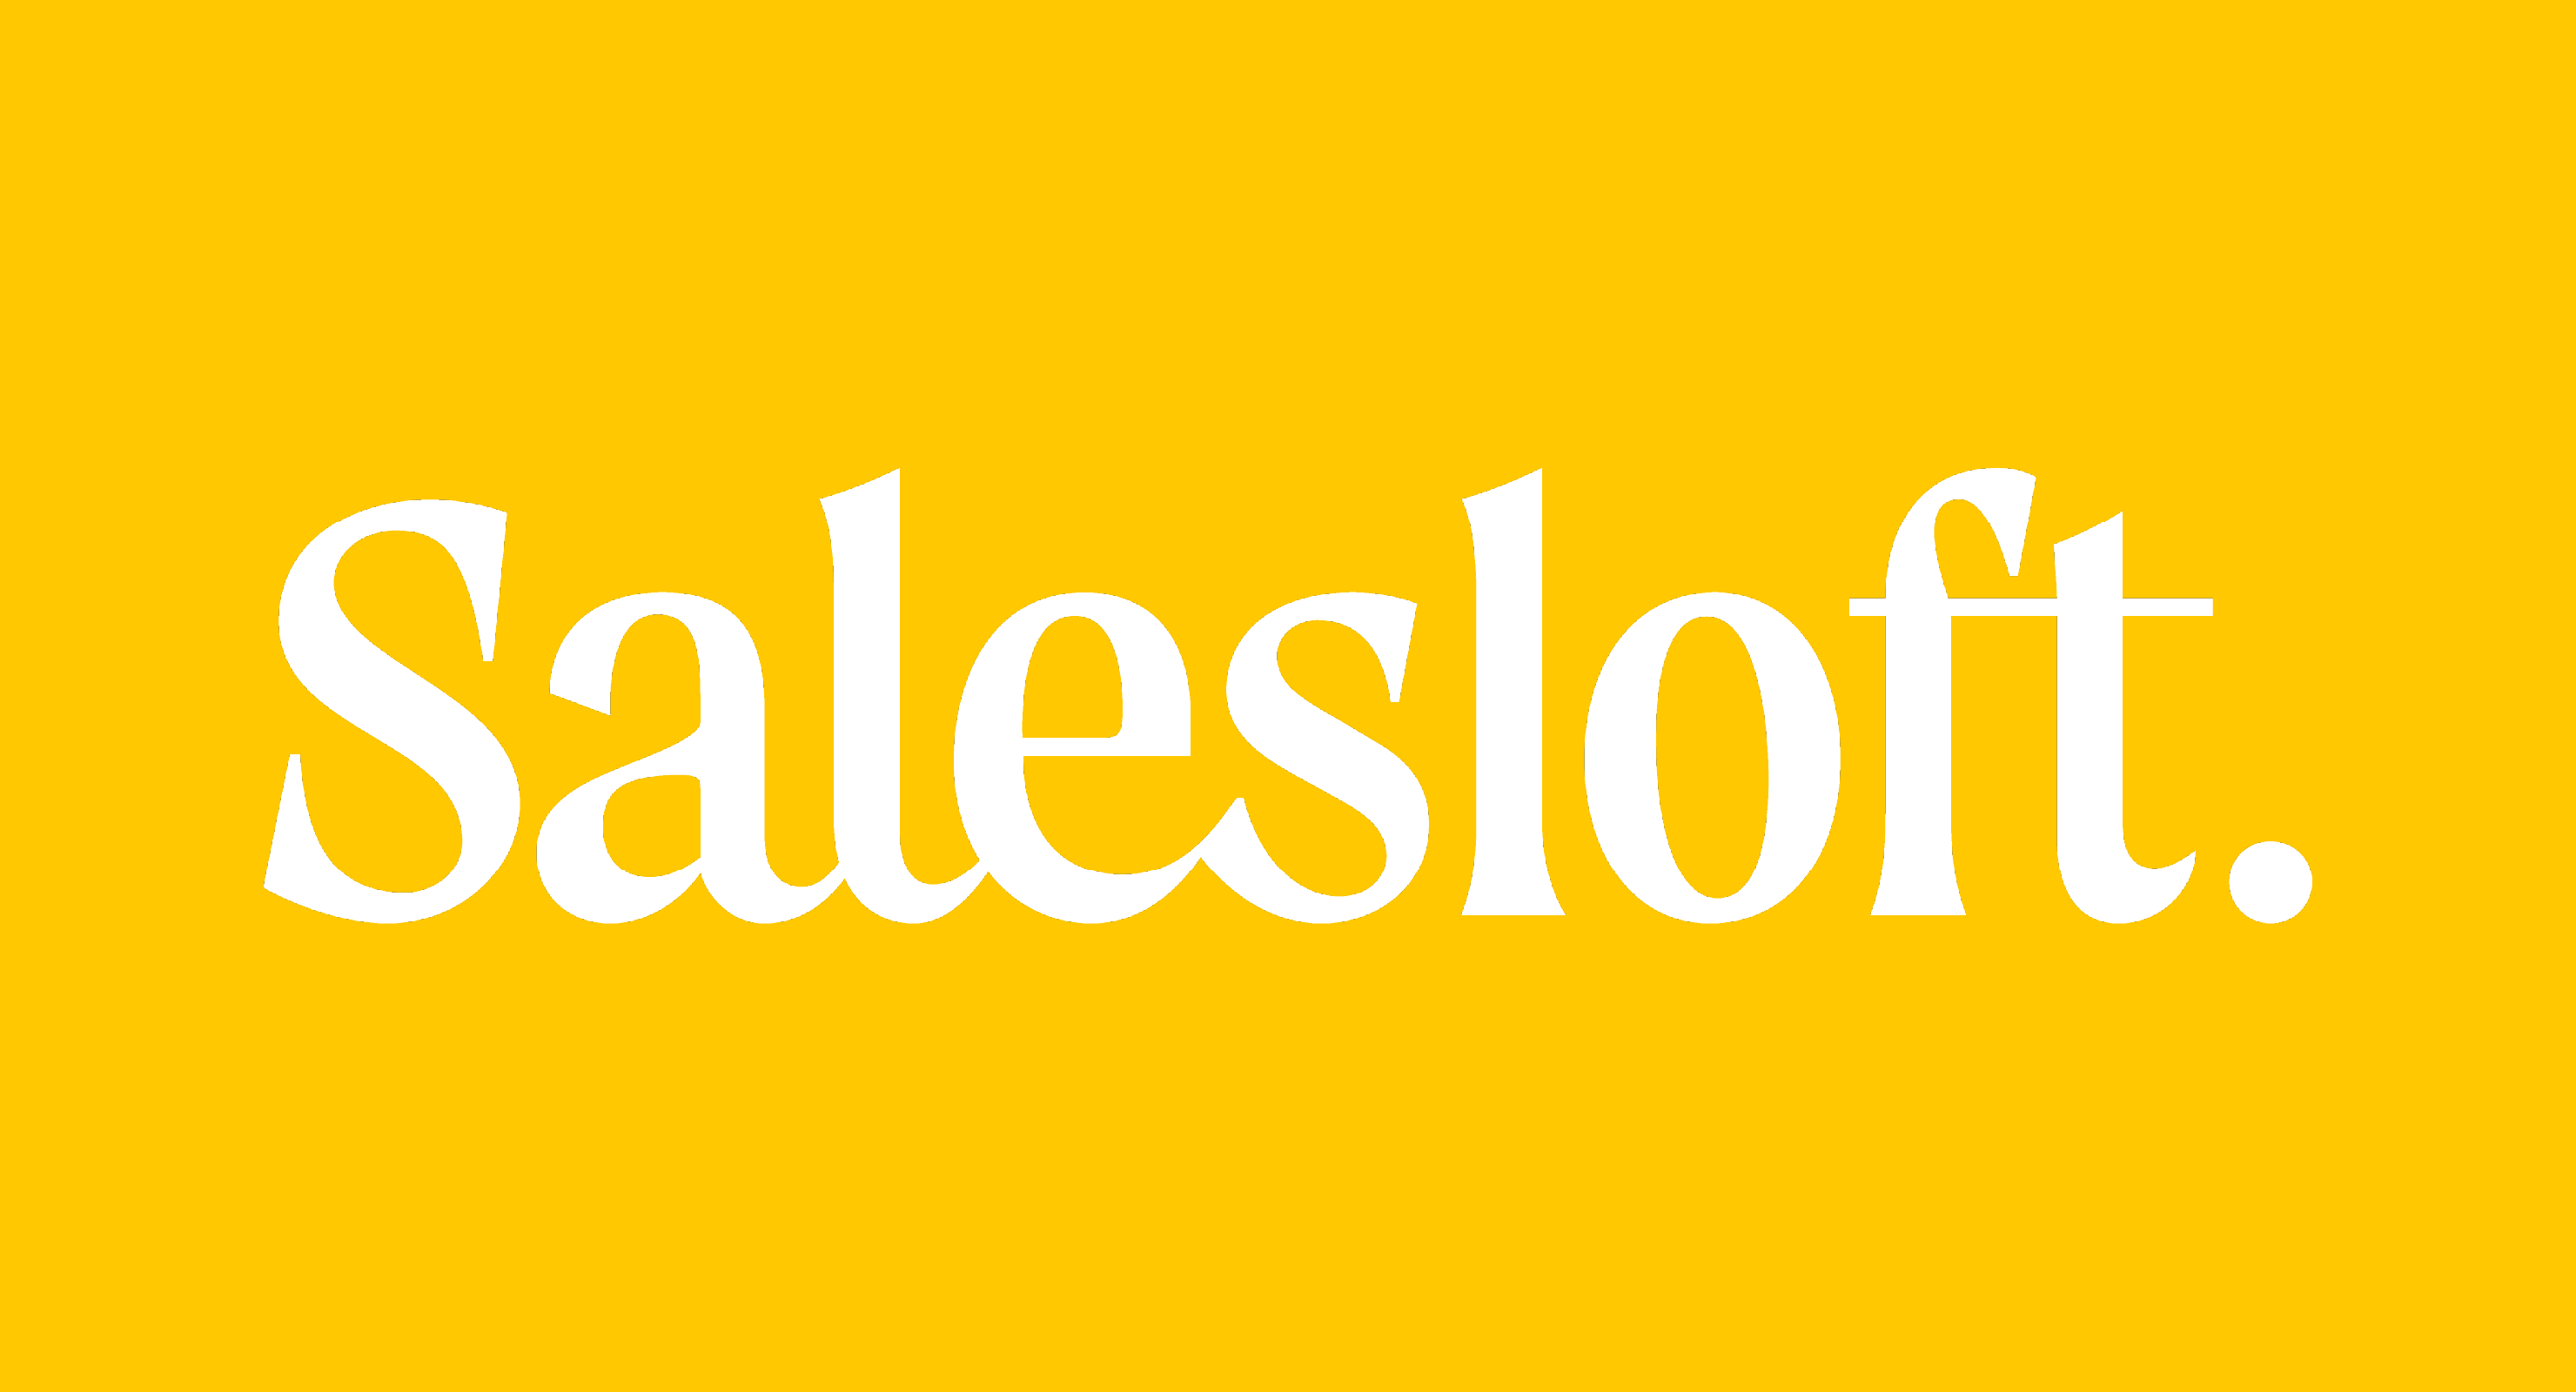 Salesloft Drives $1 Million+ in Pipeline